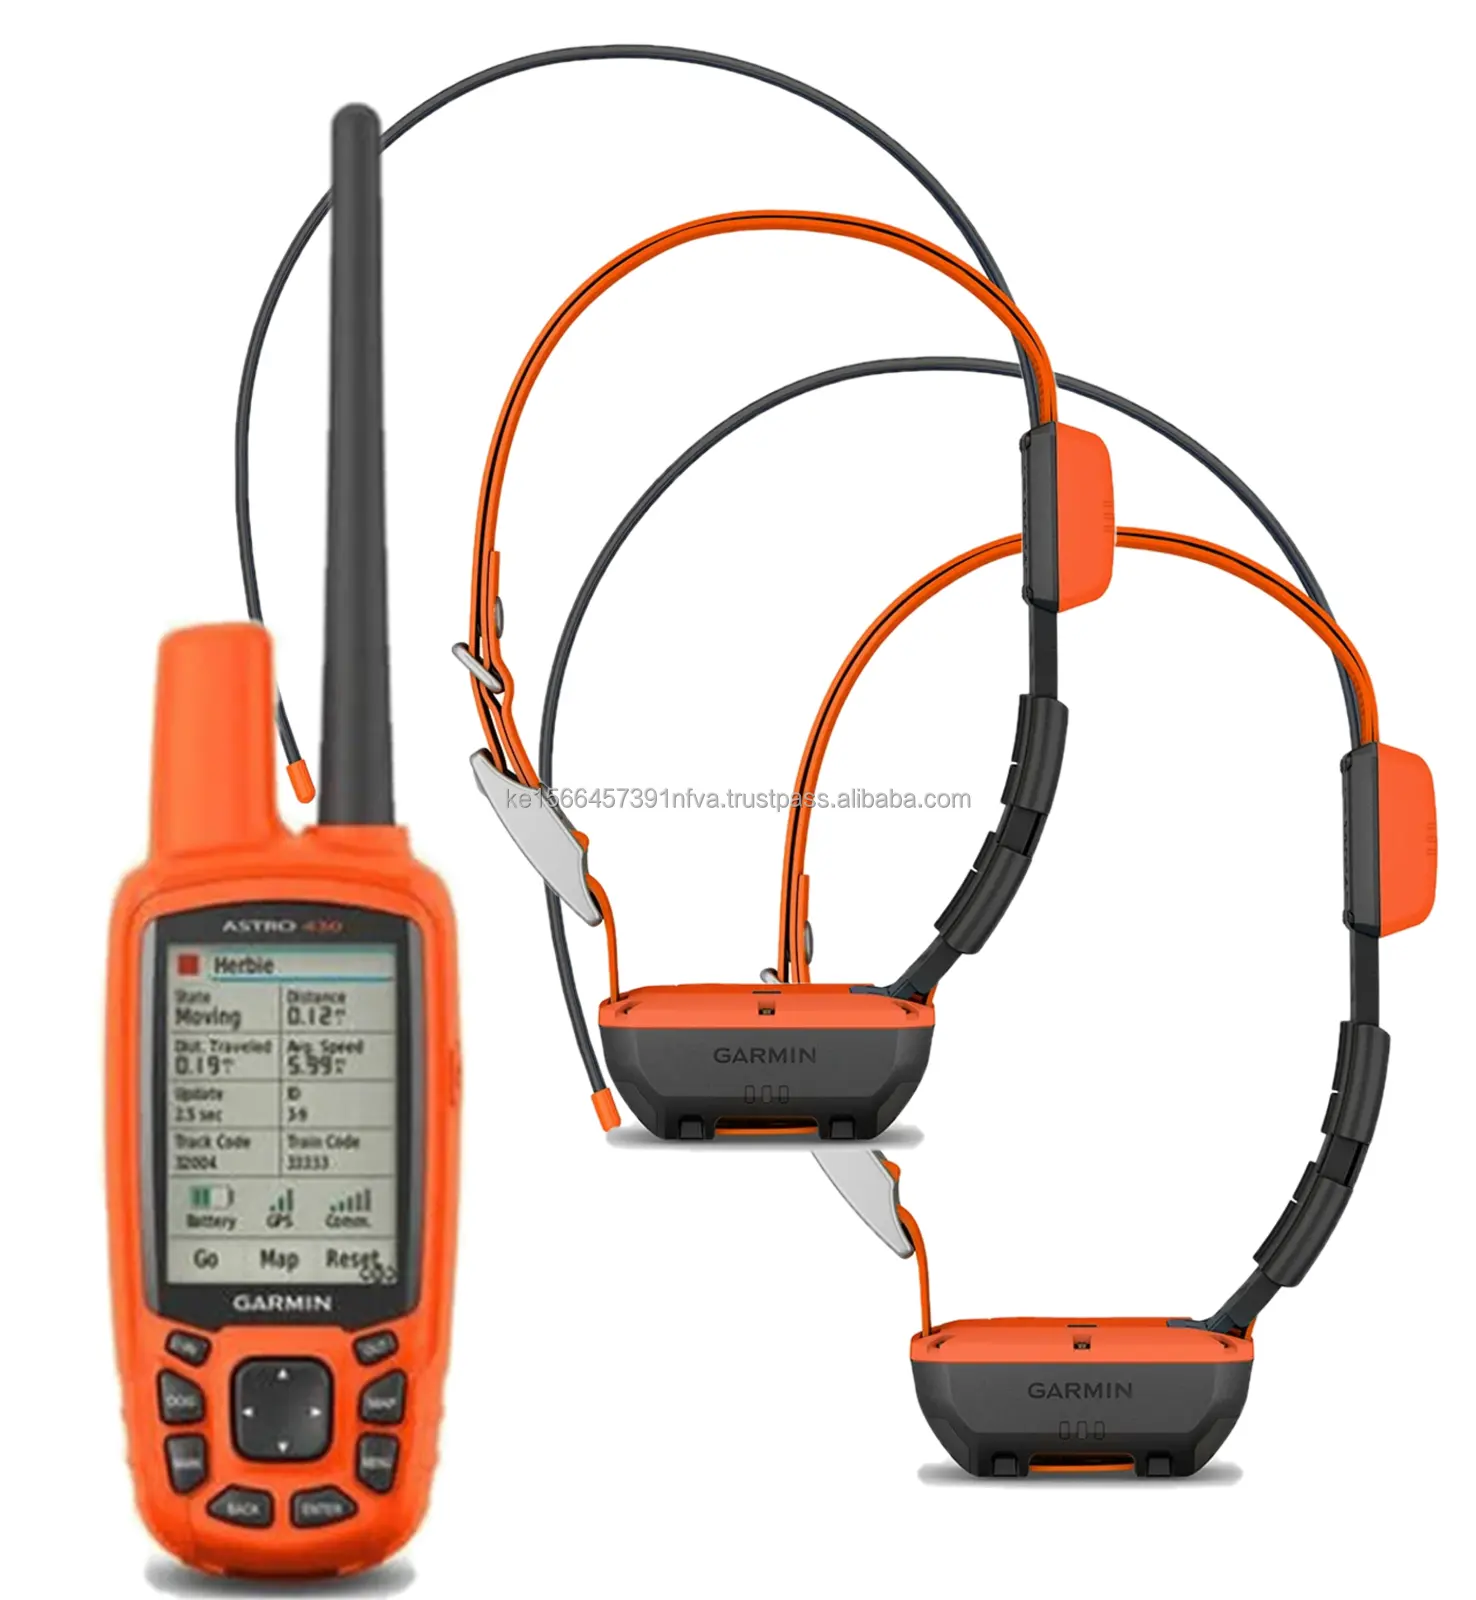 BRAND NEW ASTRO 430 T 5 GPS Handheld Dog Tracking System Bundle